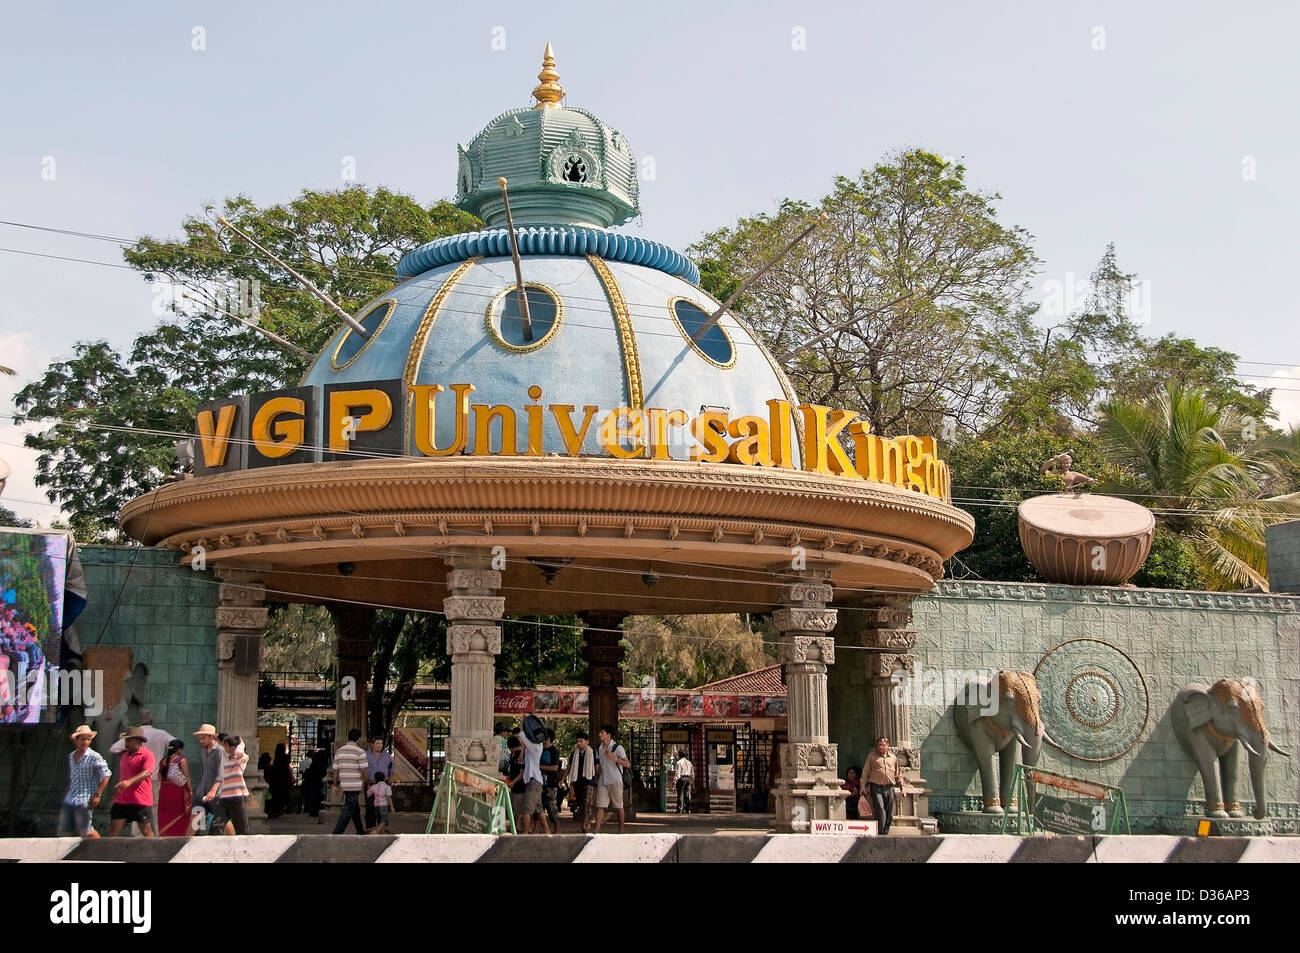 VGP Universal Kingdom The Best Theme Park, Amusement Park, Water Park in  Chennai ( Madras ) India Tamil Nadu Stock Photo